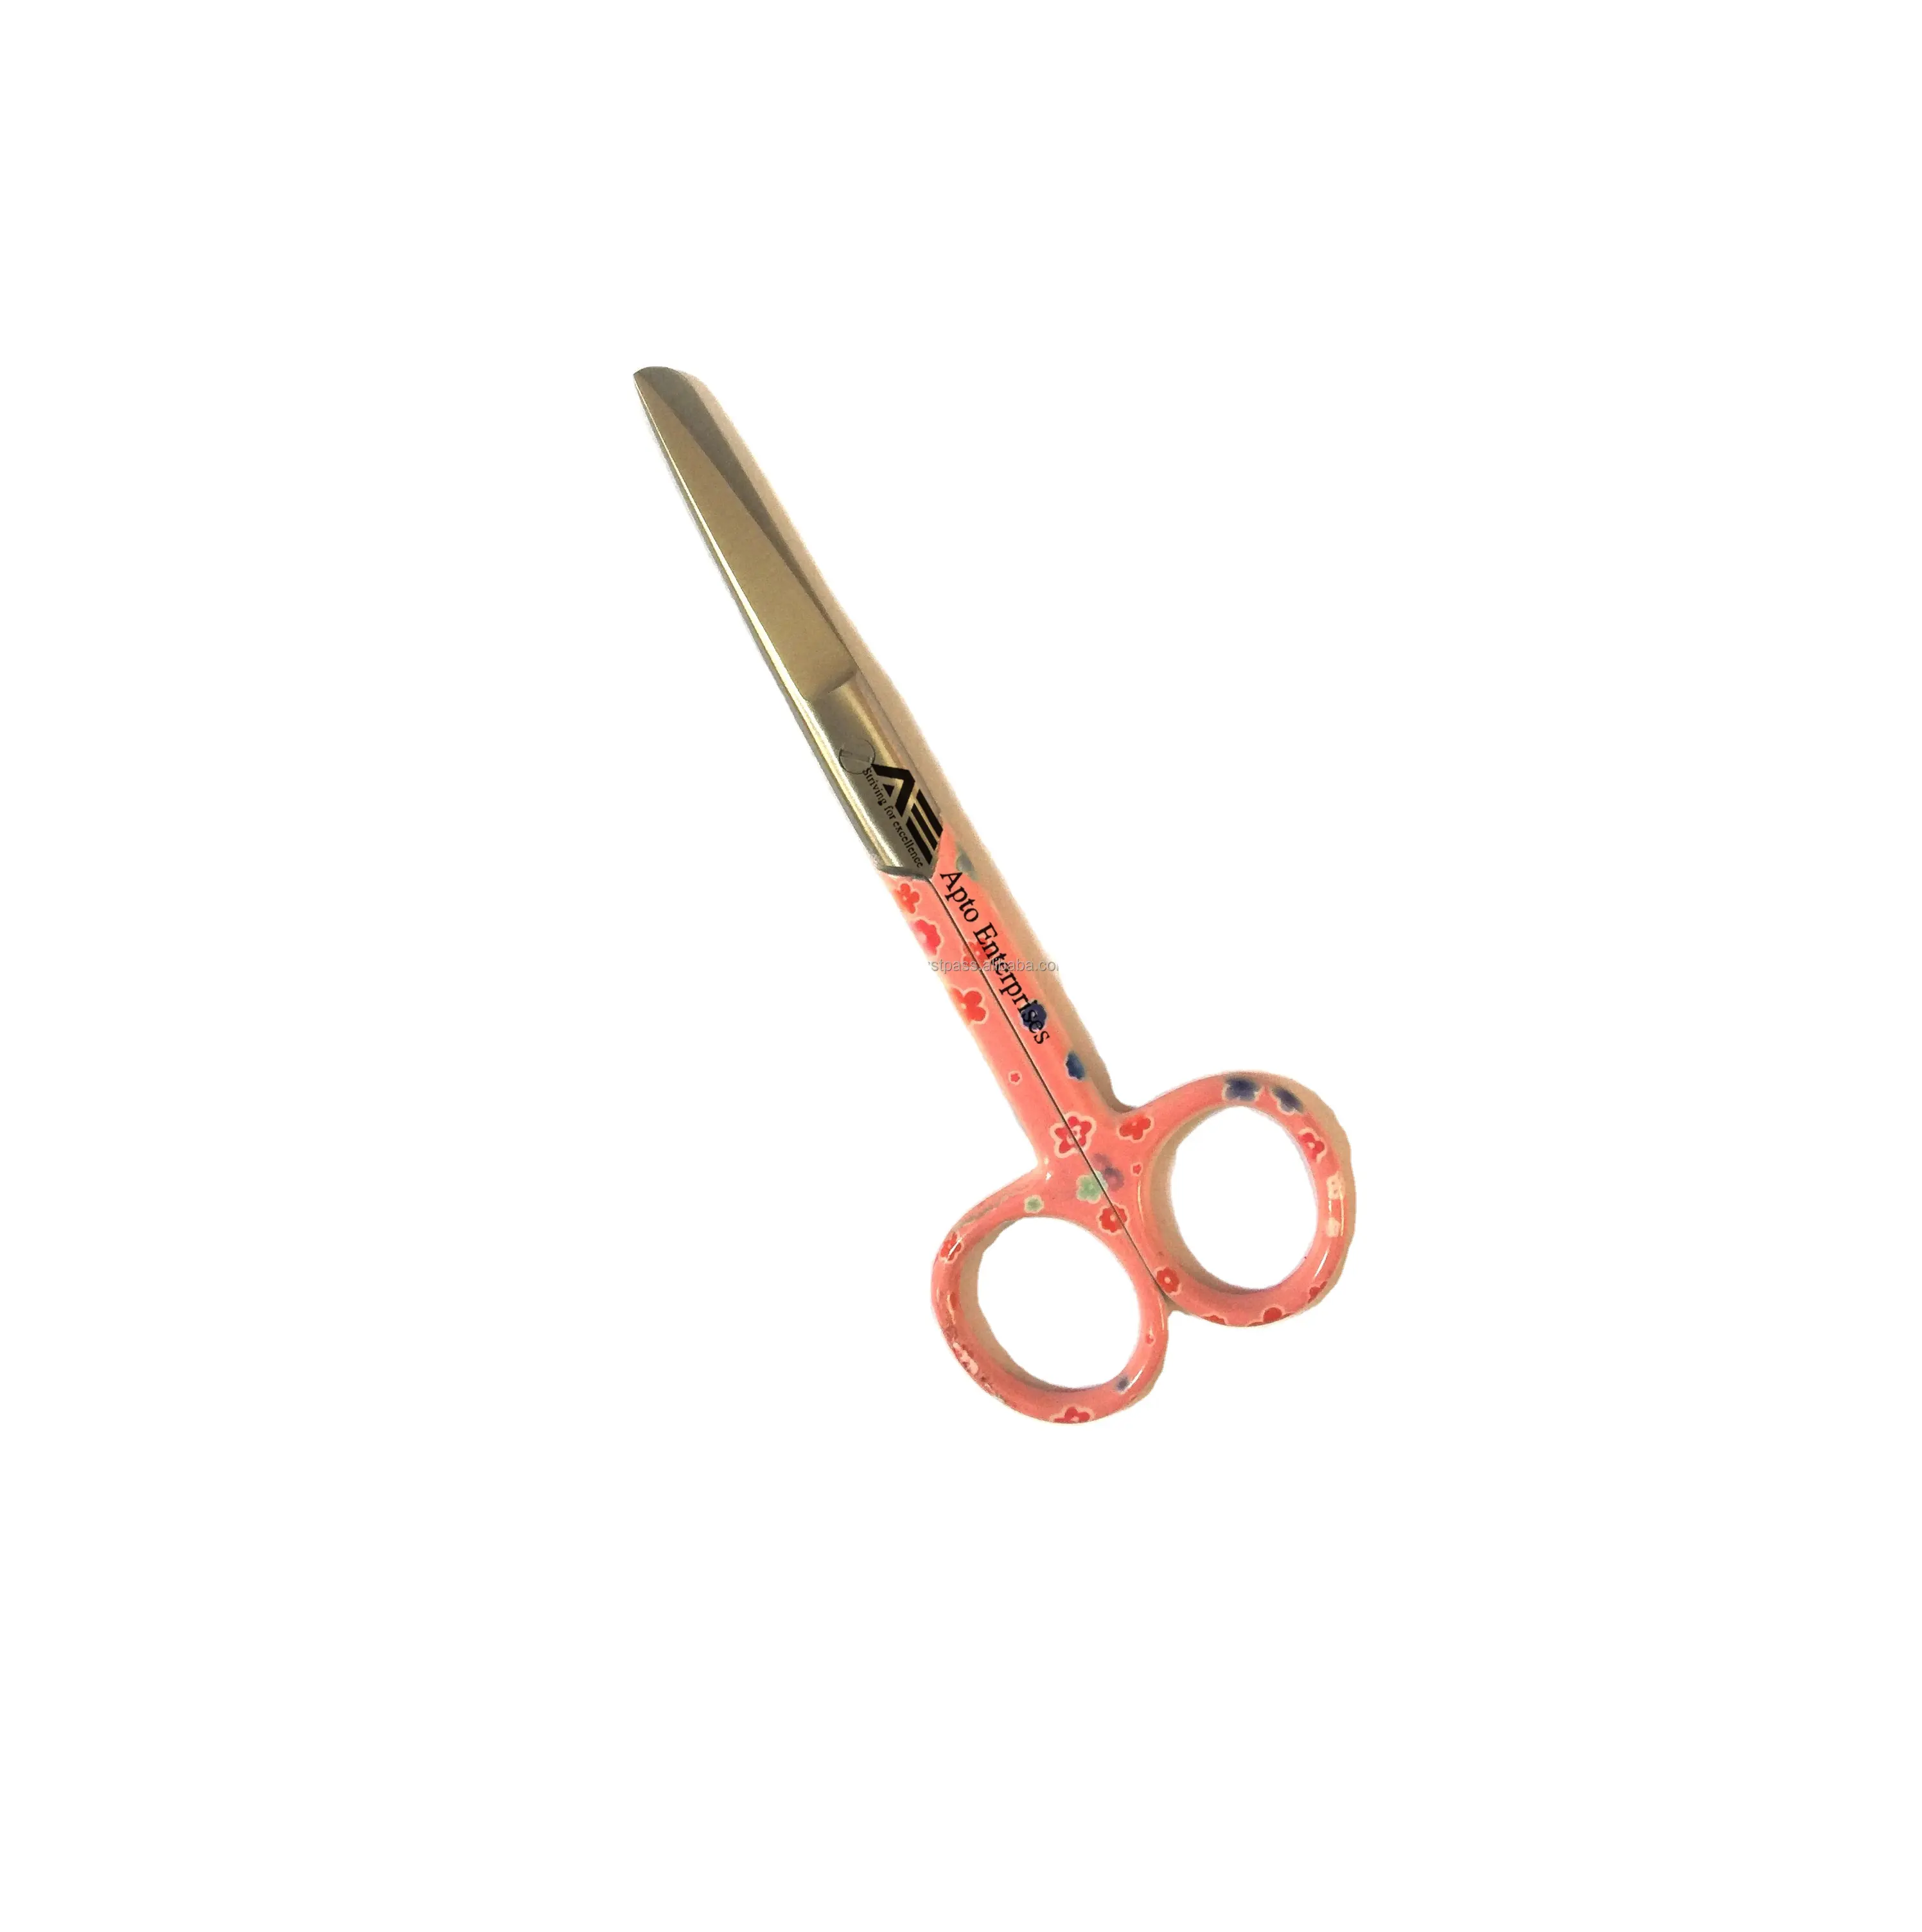 Apto Enterprises' Hot Sale Stainless Steel Dressing Scissors Colorful Attractive Designs Class I Surgical Instruments Nurses